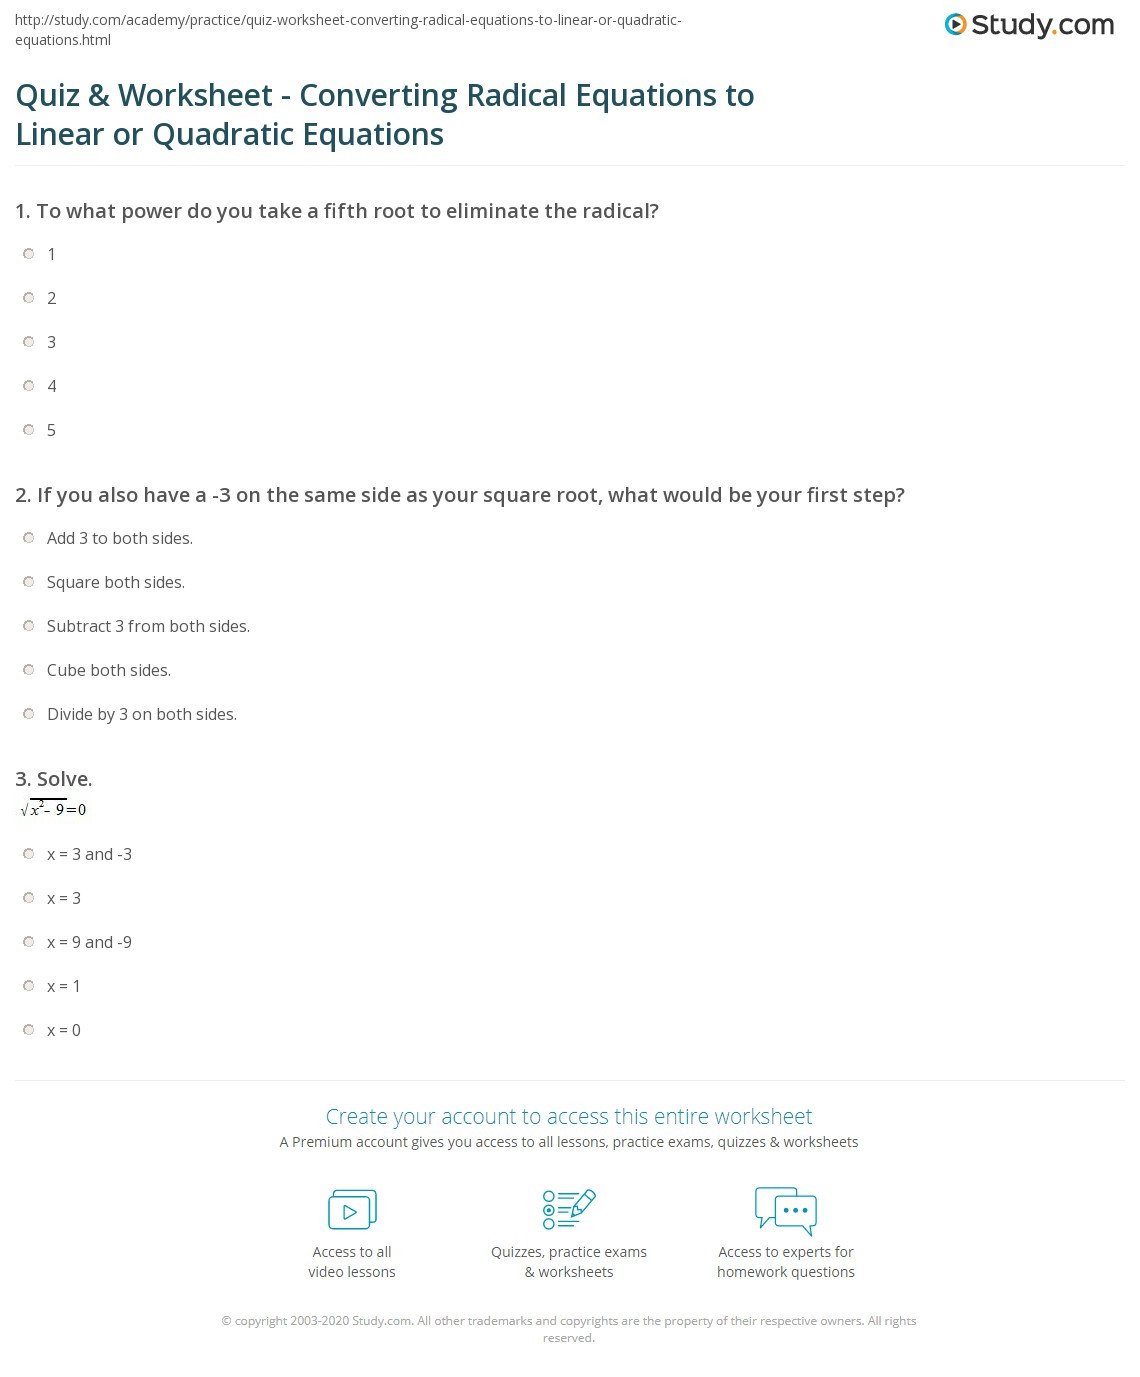 Solving Radical Equations Worksheet Quiz &amp; Worksheet Converting Radical Equations to Linear or